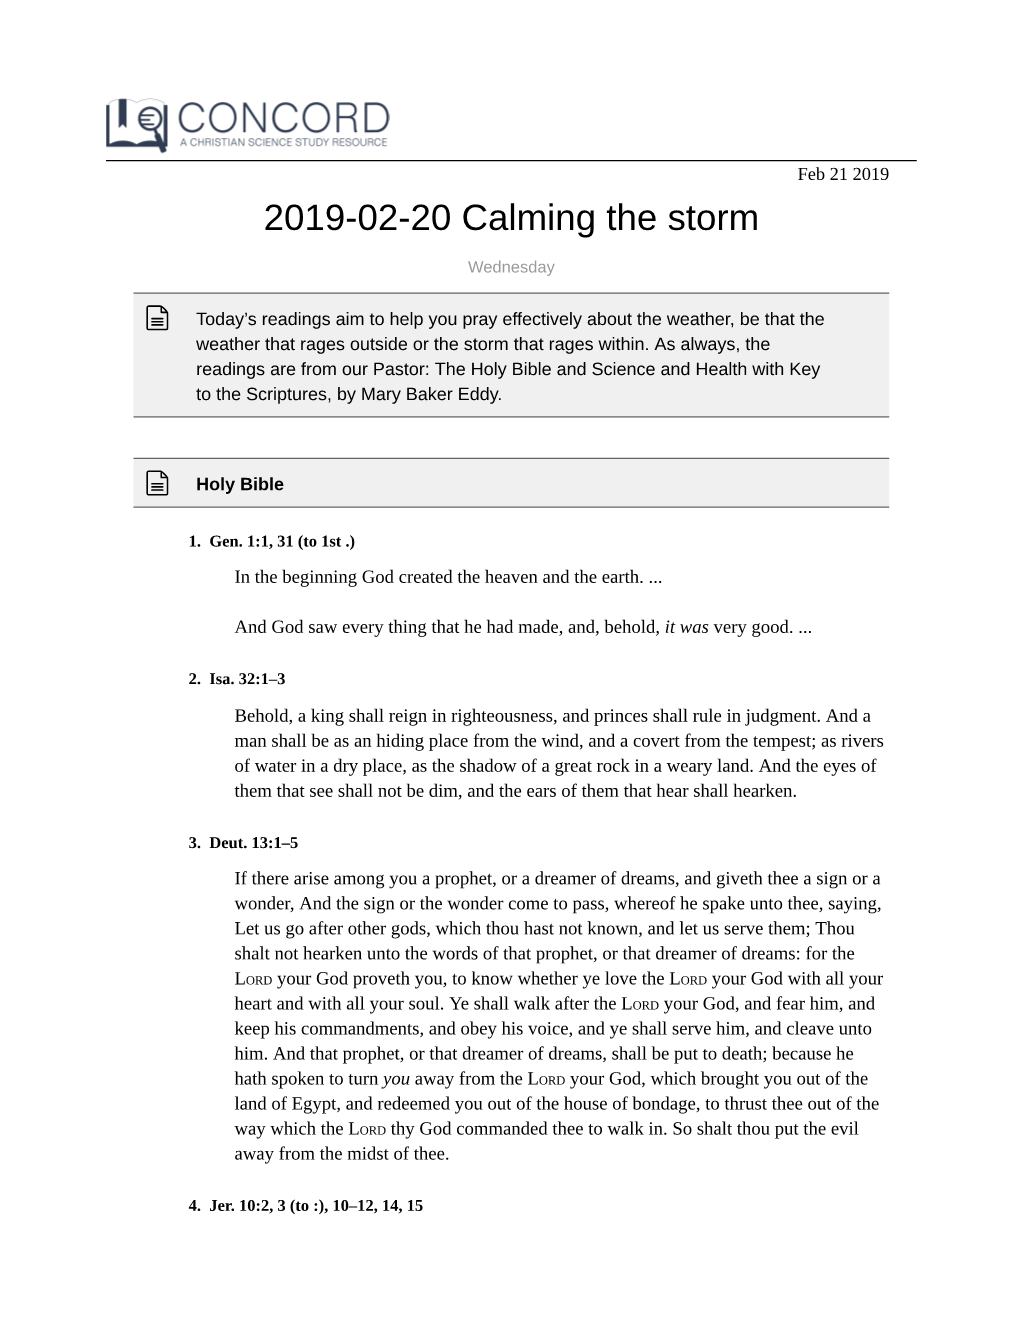 2019-02-20 Calming the Storm